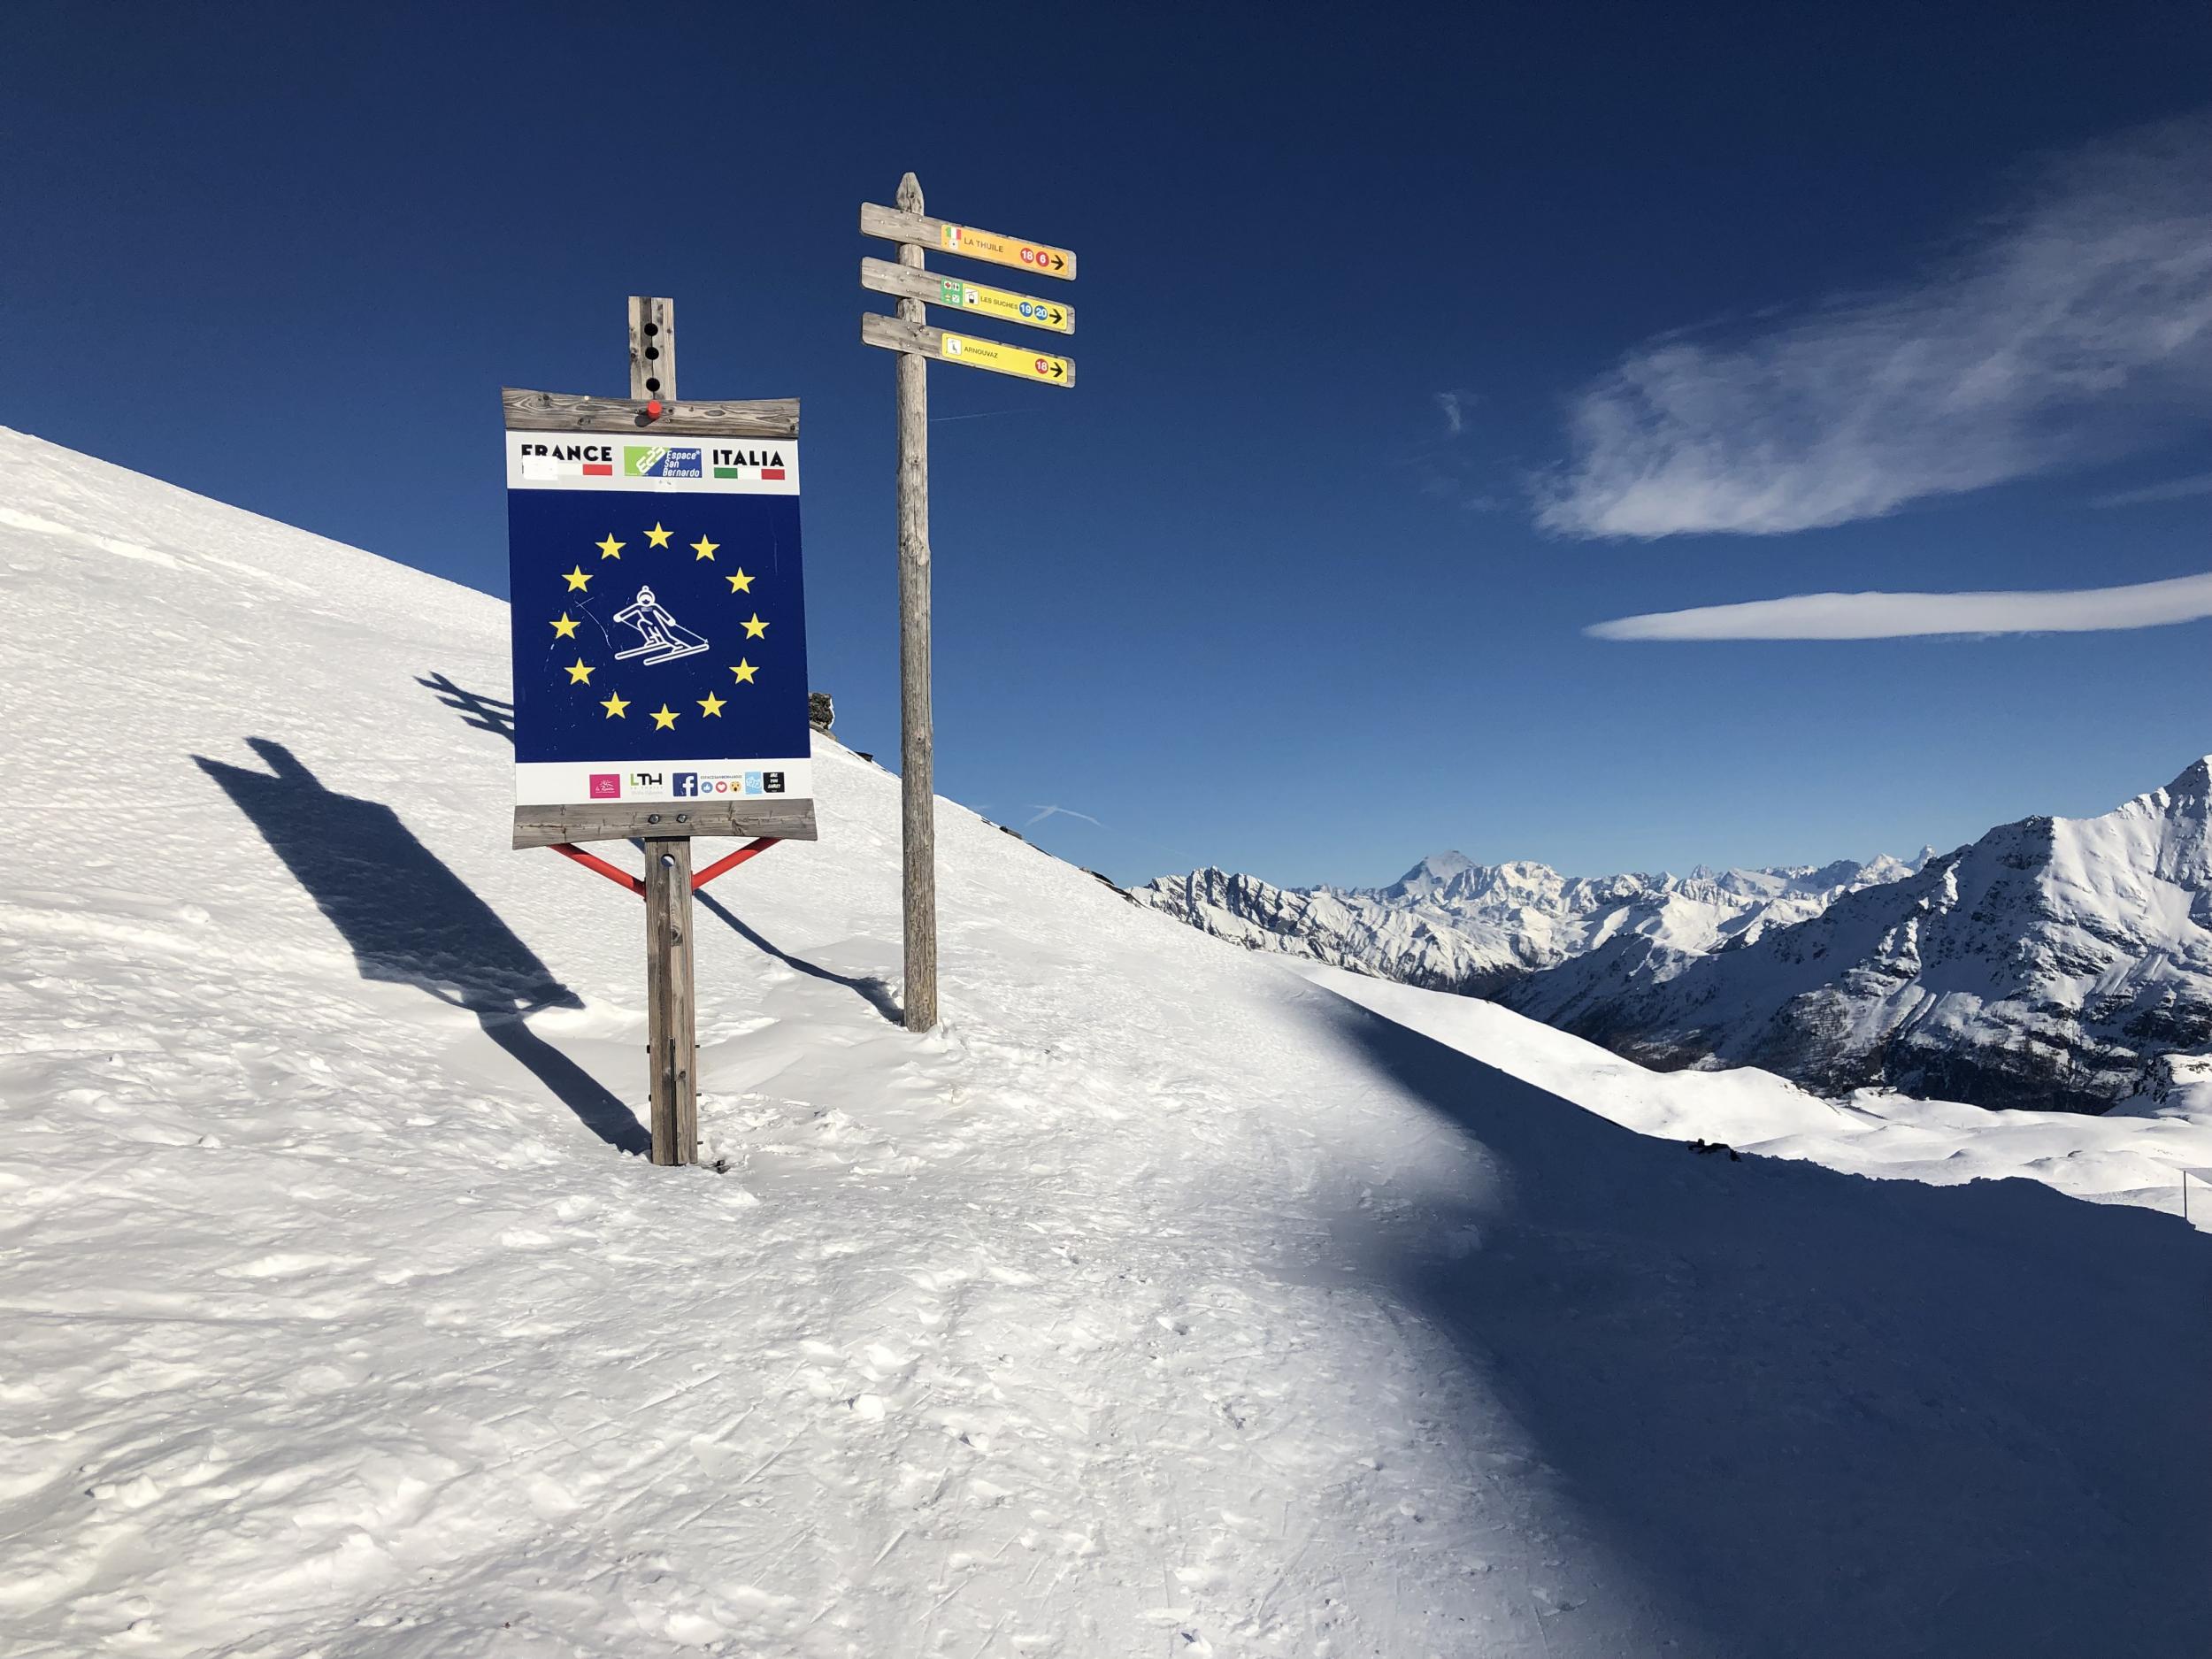 La Rosière shares a ski area with La Thuile across the Italian border